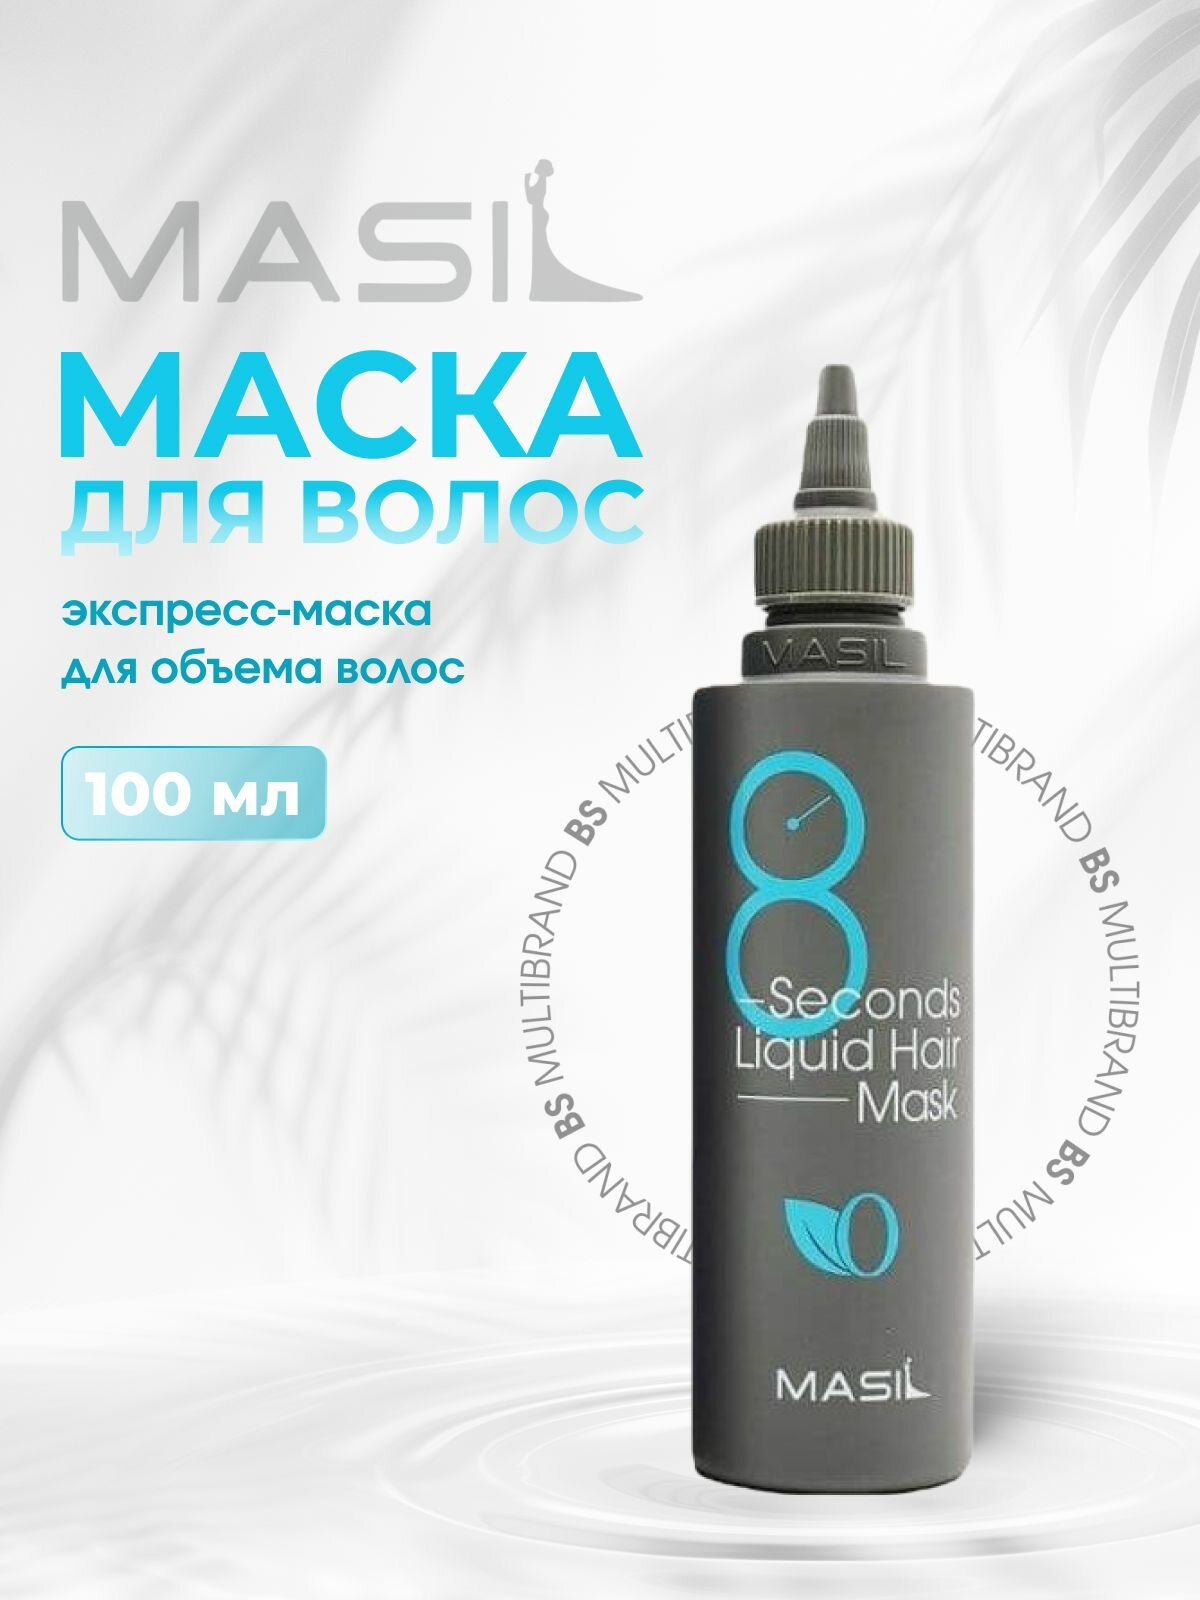 Masil Экспресс-маска для объема волос Masil 8 Seconds Salon Liquid Hair Mask 100мл